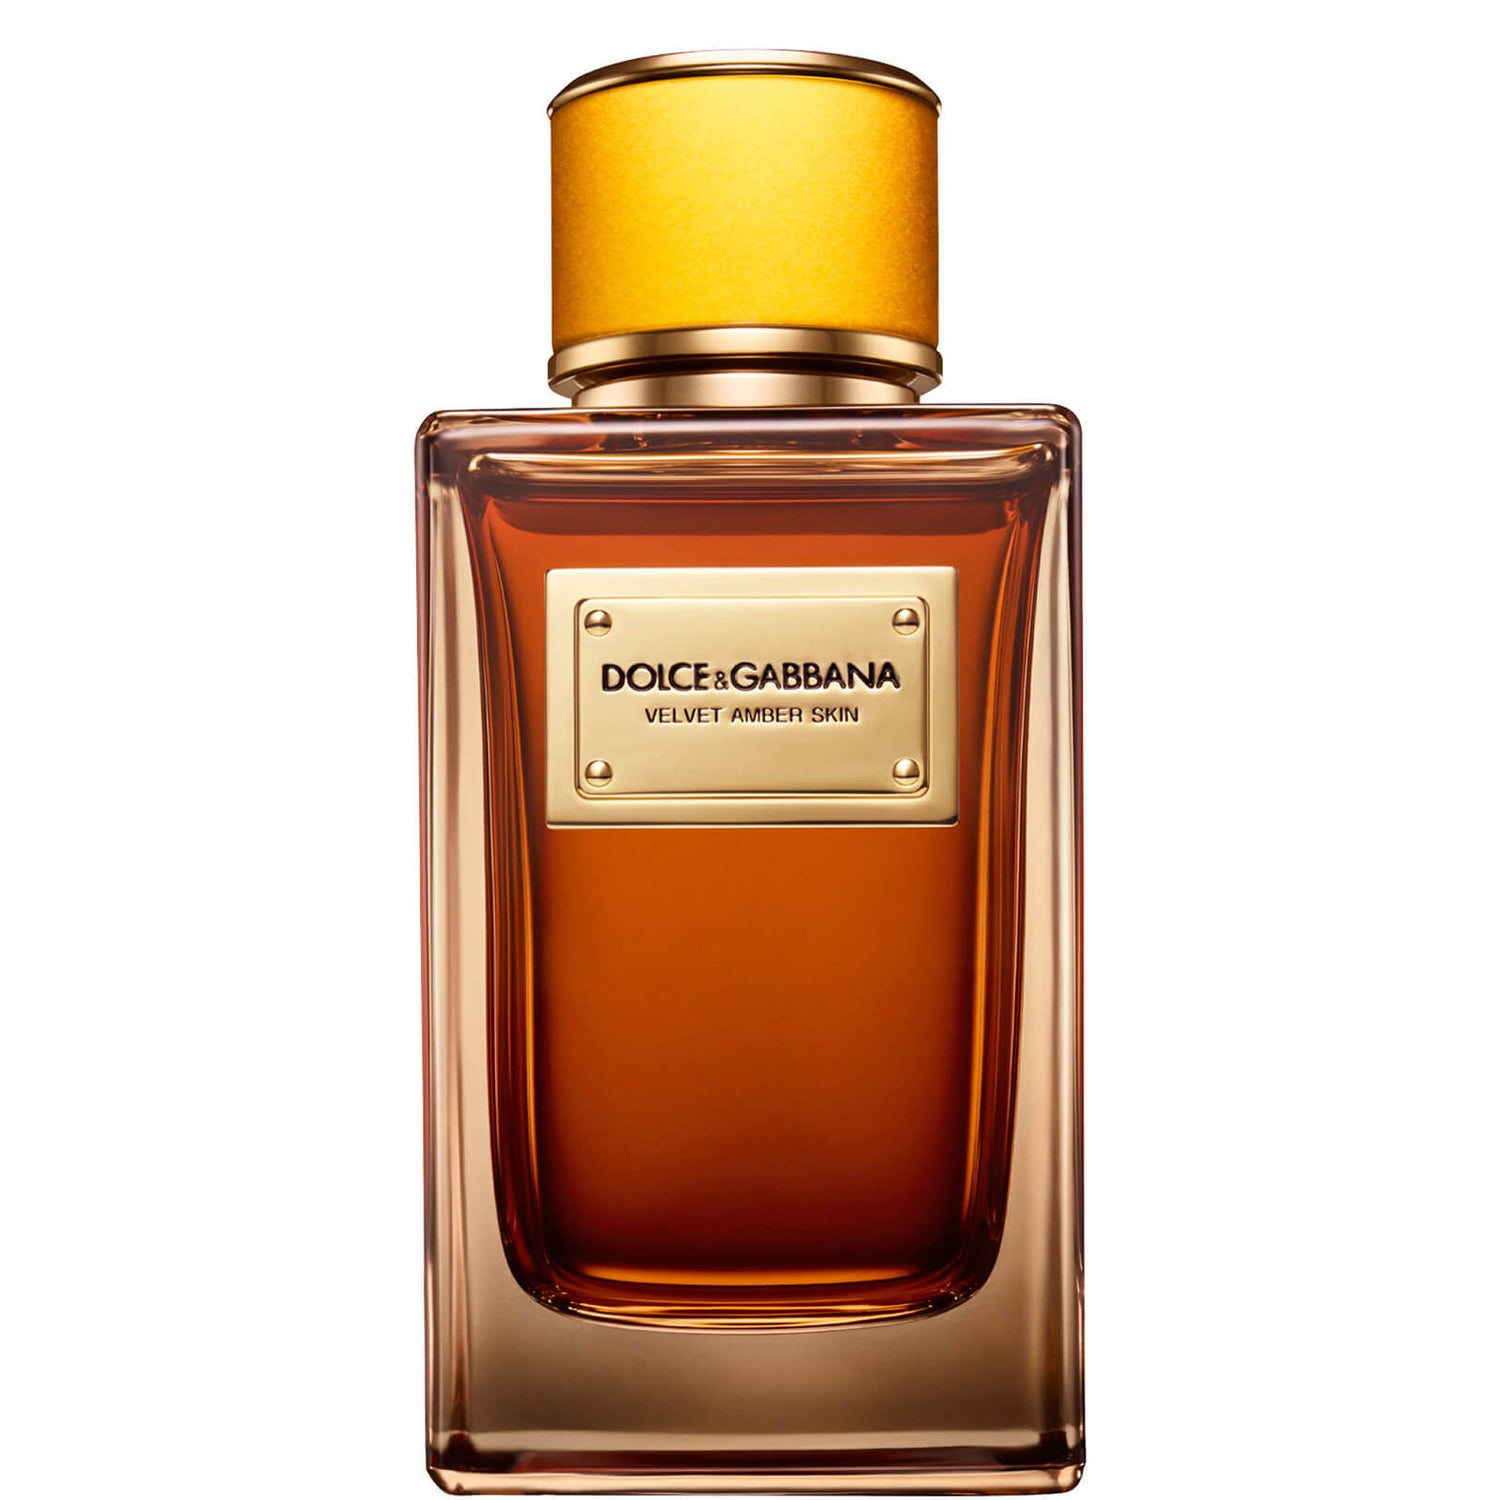 Dolce&Gabbana Velvet Amber Skin Eau de Parfum - 150ml Dolce&Gabbana Velvet Amber Skin parfémovaná voda - 150 ml